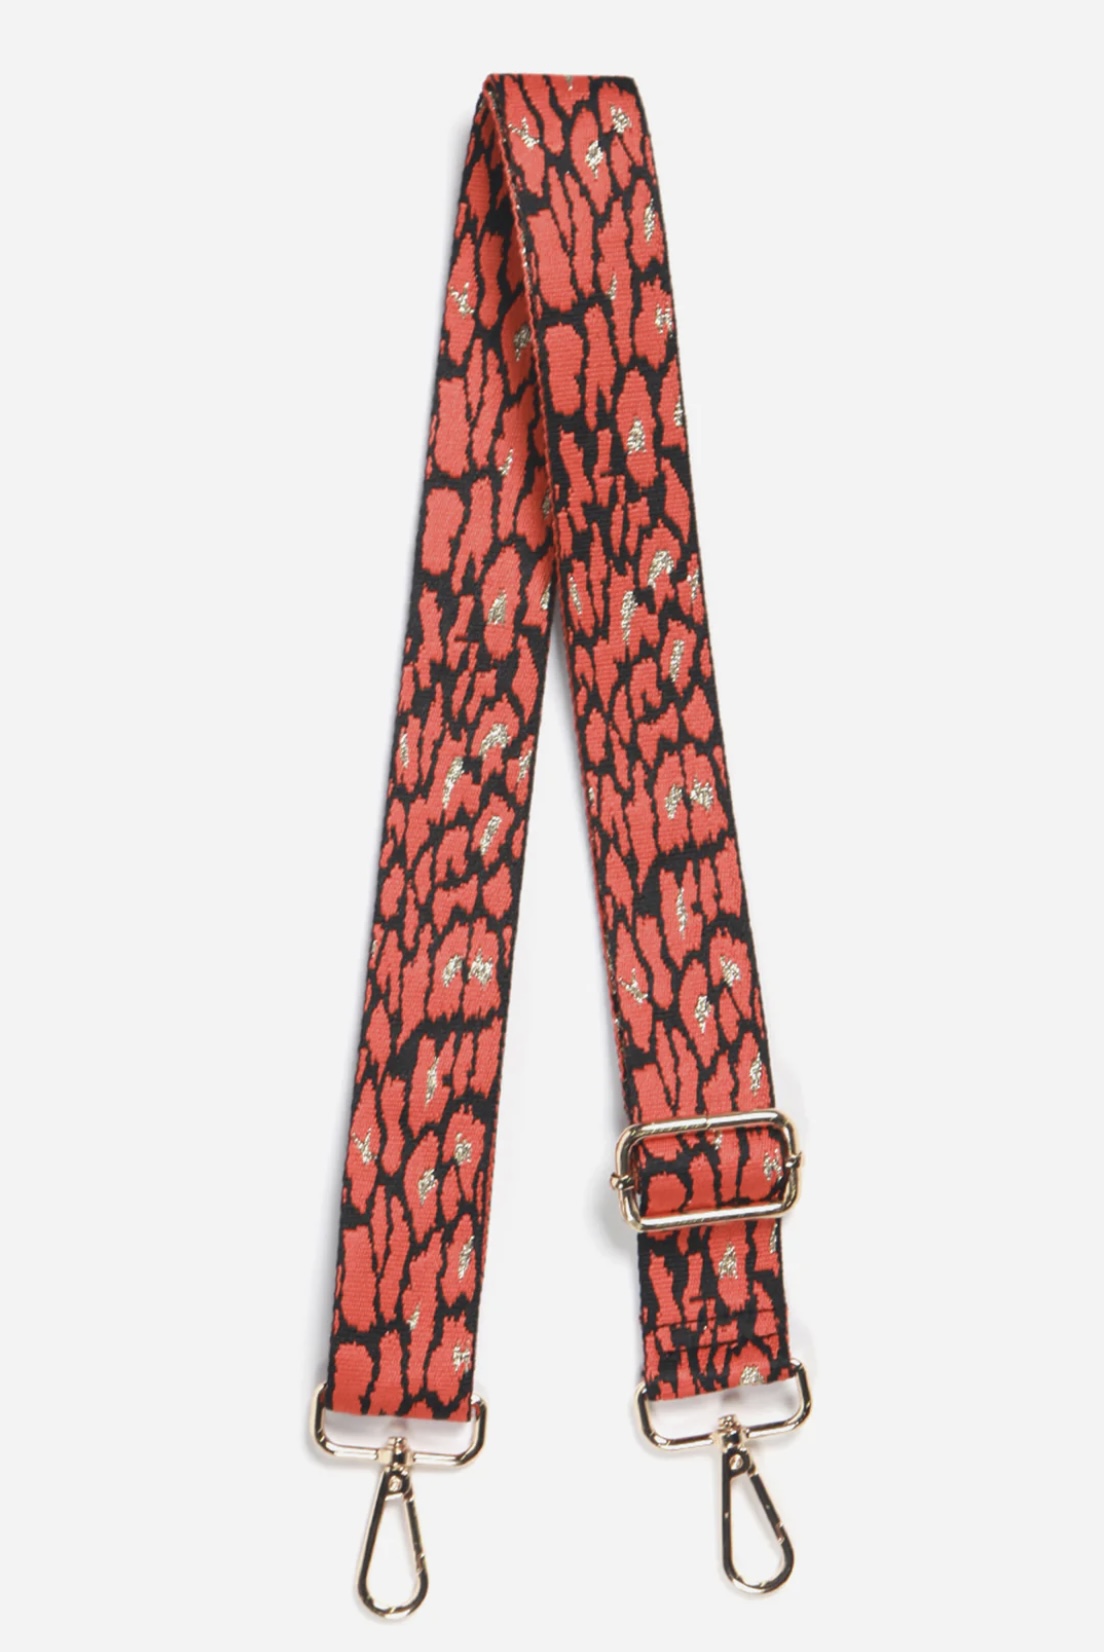 Bag Strap Orange Leopard Print